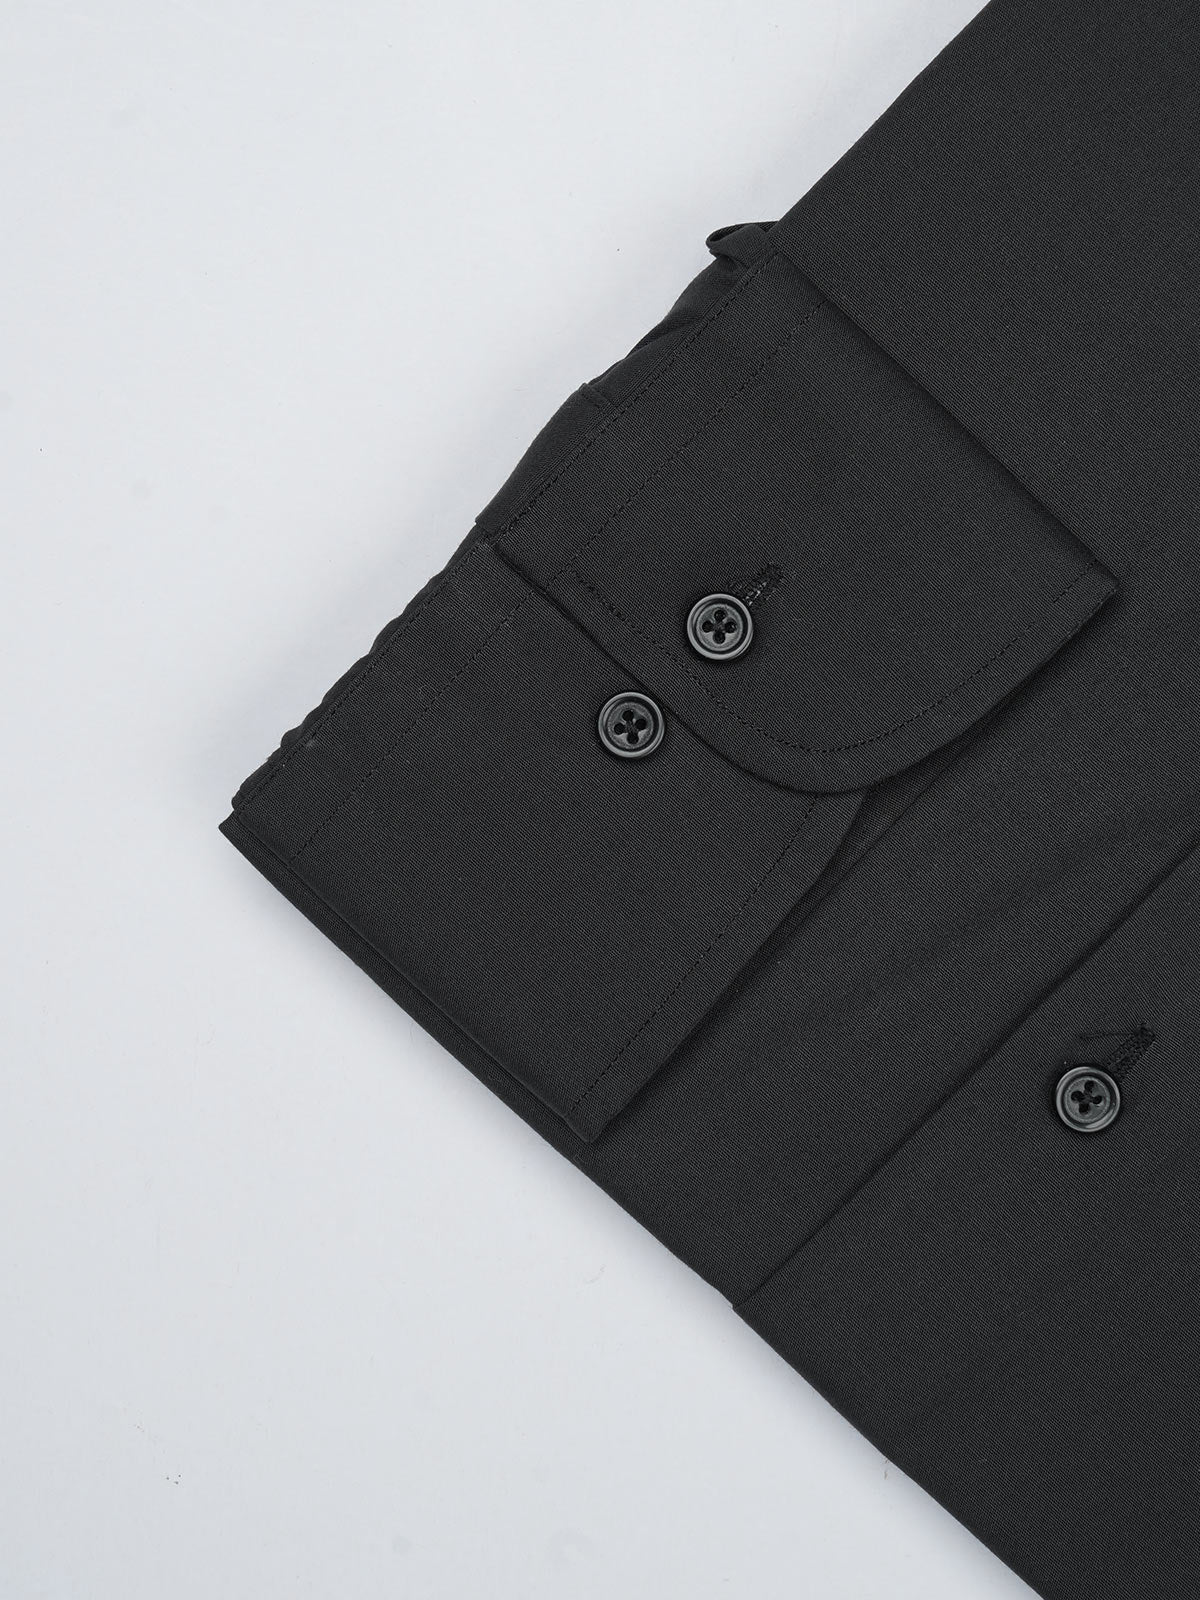 Black Plain, Elite Edition, French Collar Men’s Formal Shirt (FS-740)